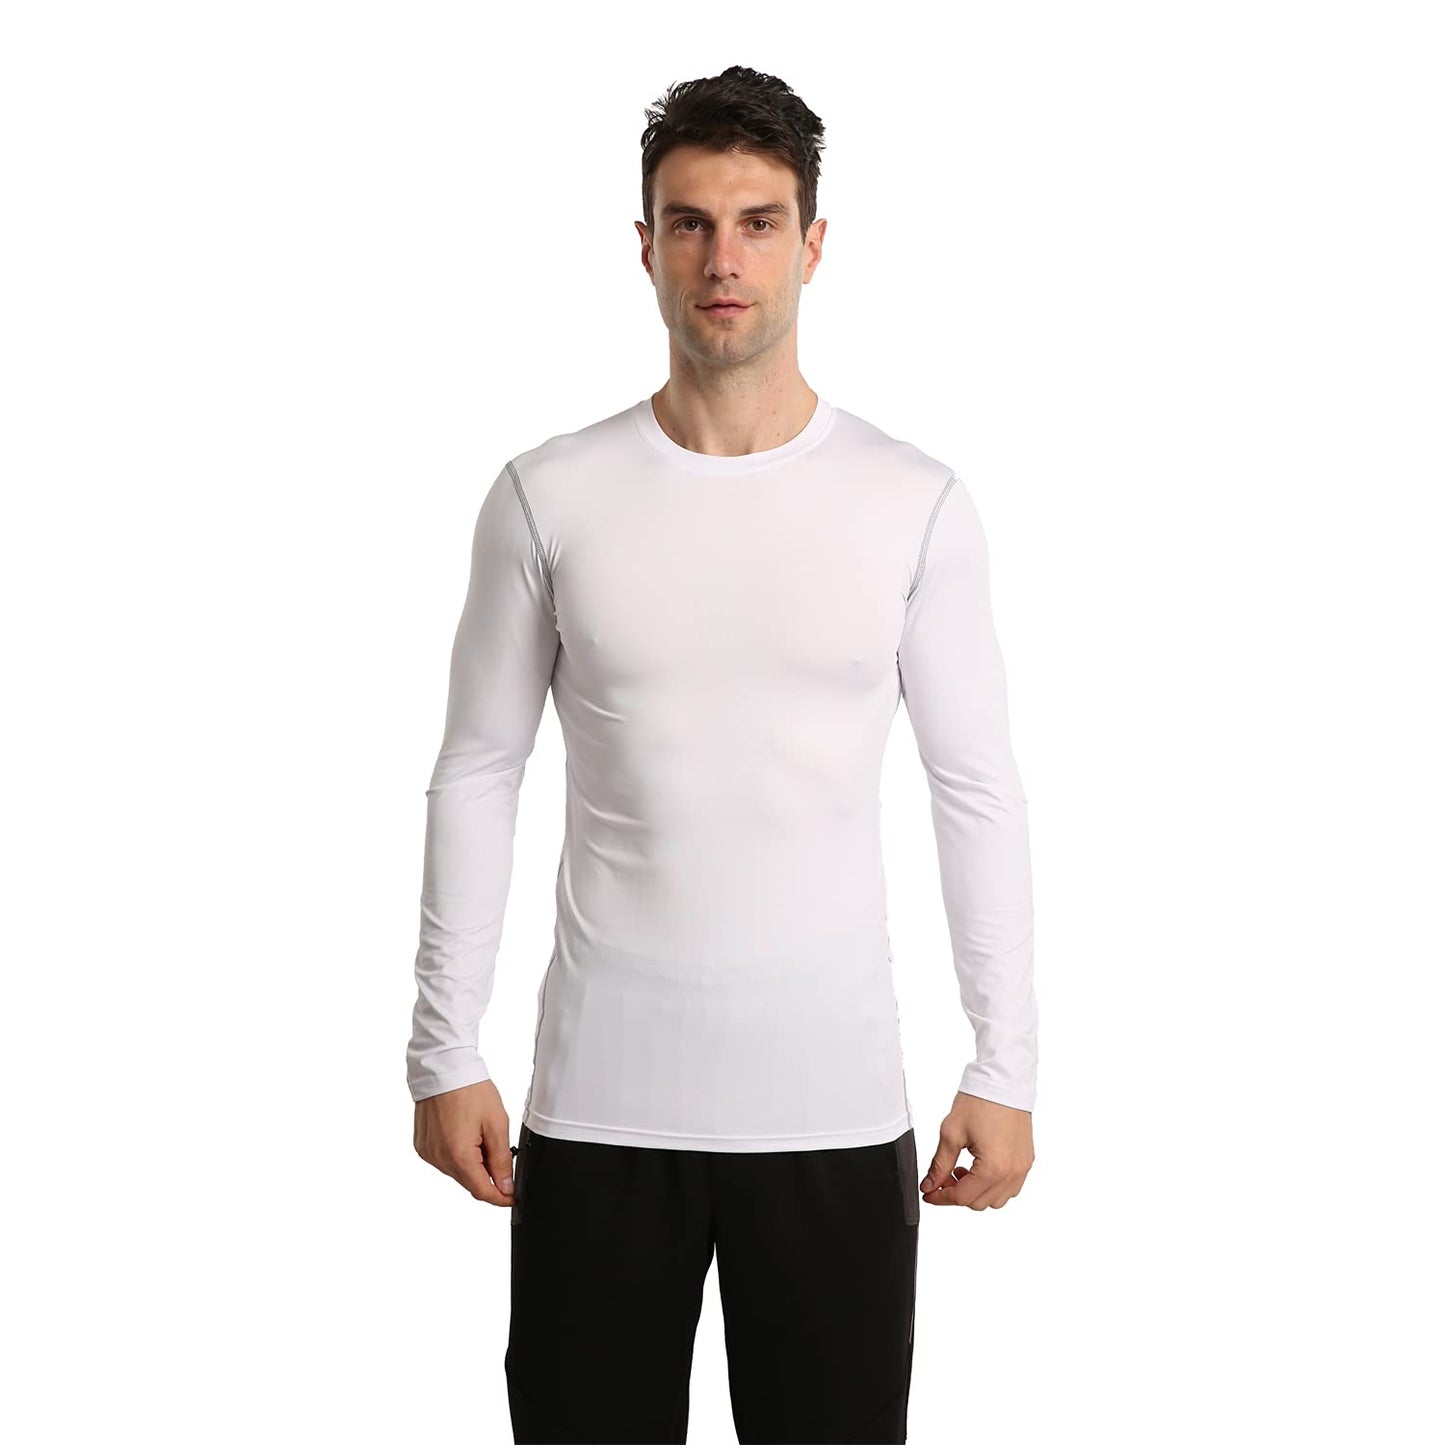 Men 3 Pack Long Sleeve Compression Shirts Male Workout Running Shirts LANBAOSI